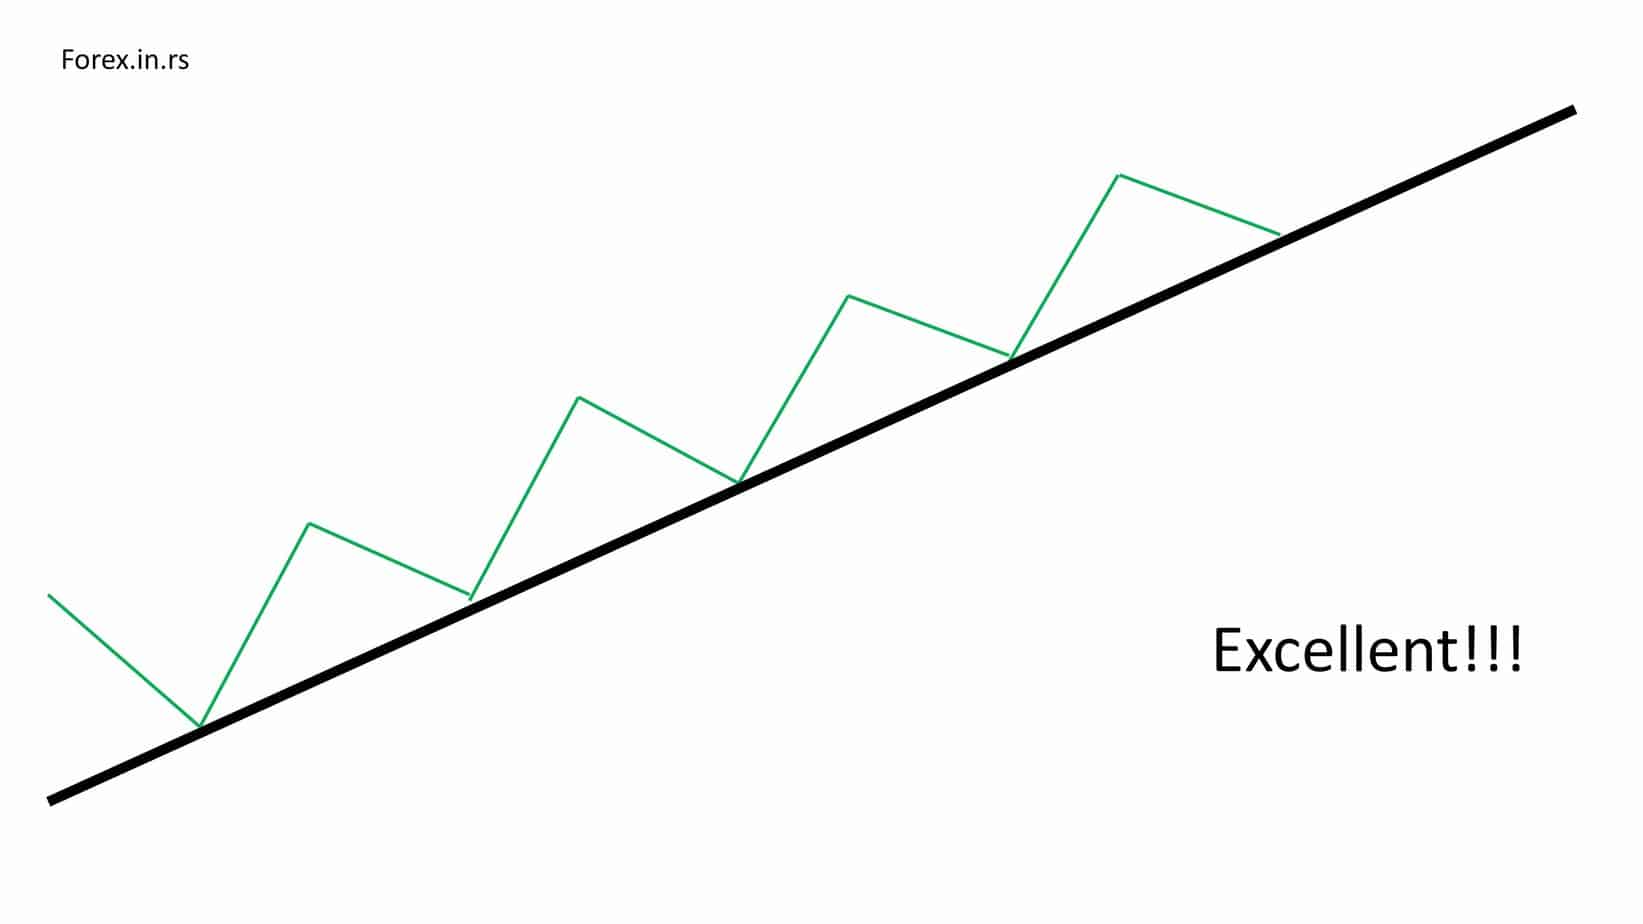 upper trend line